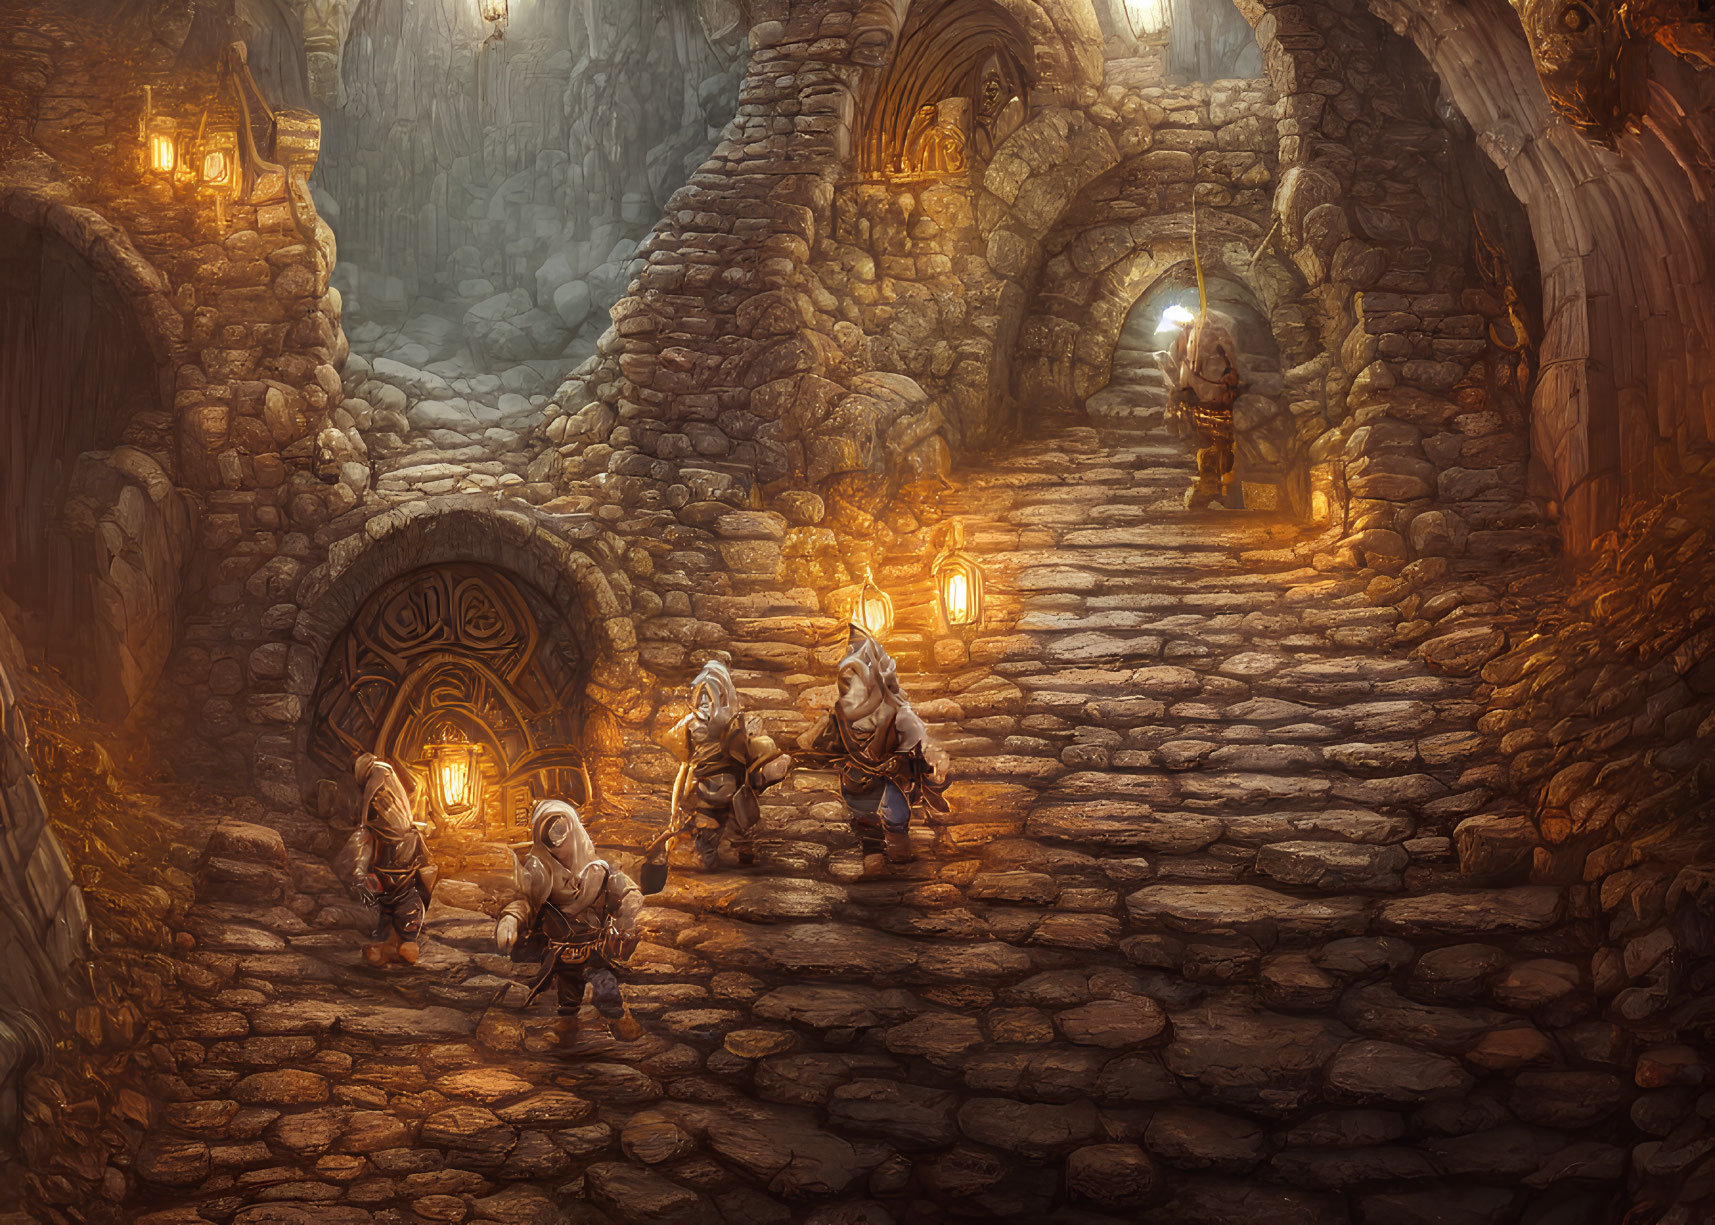 Ancient Underground Halls with Dwarven Warriors and Stone Arches